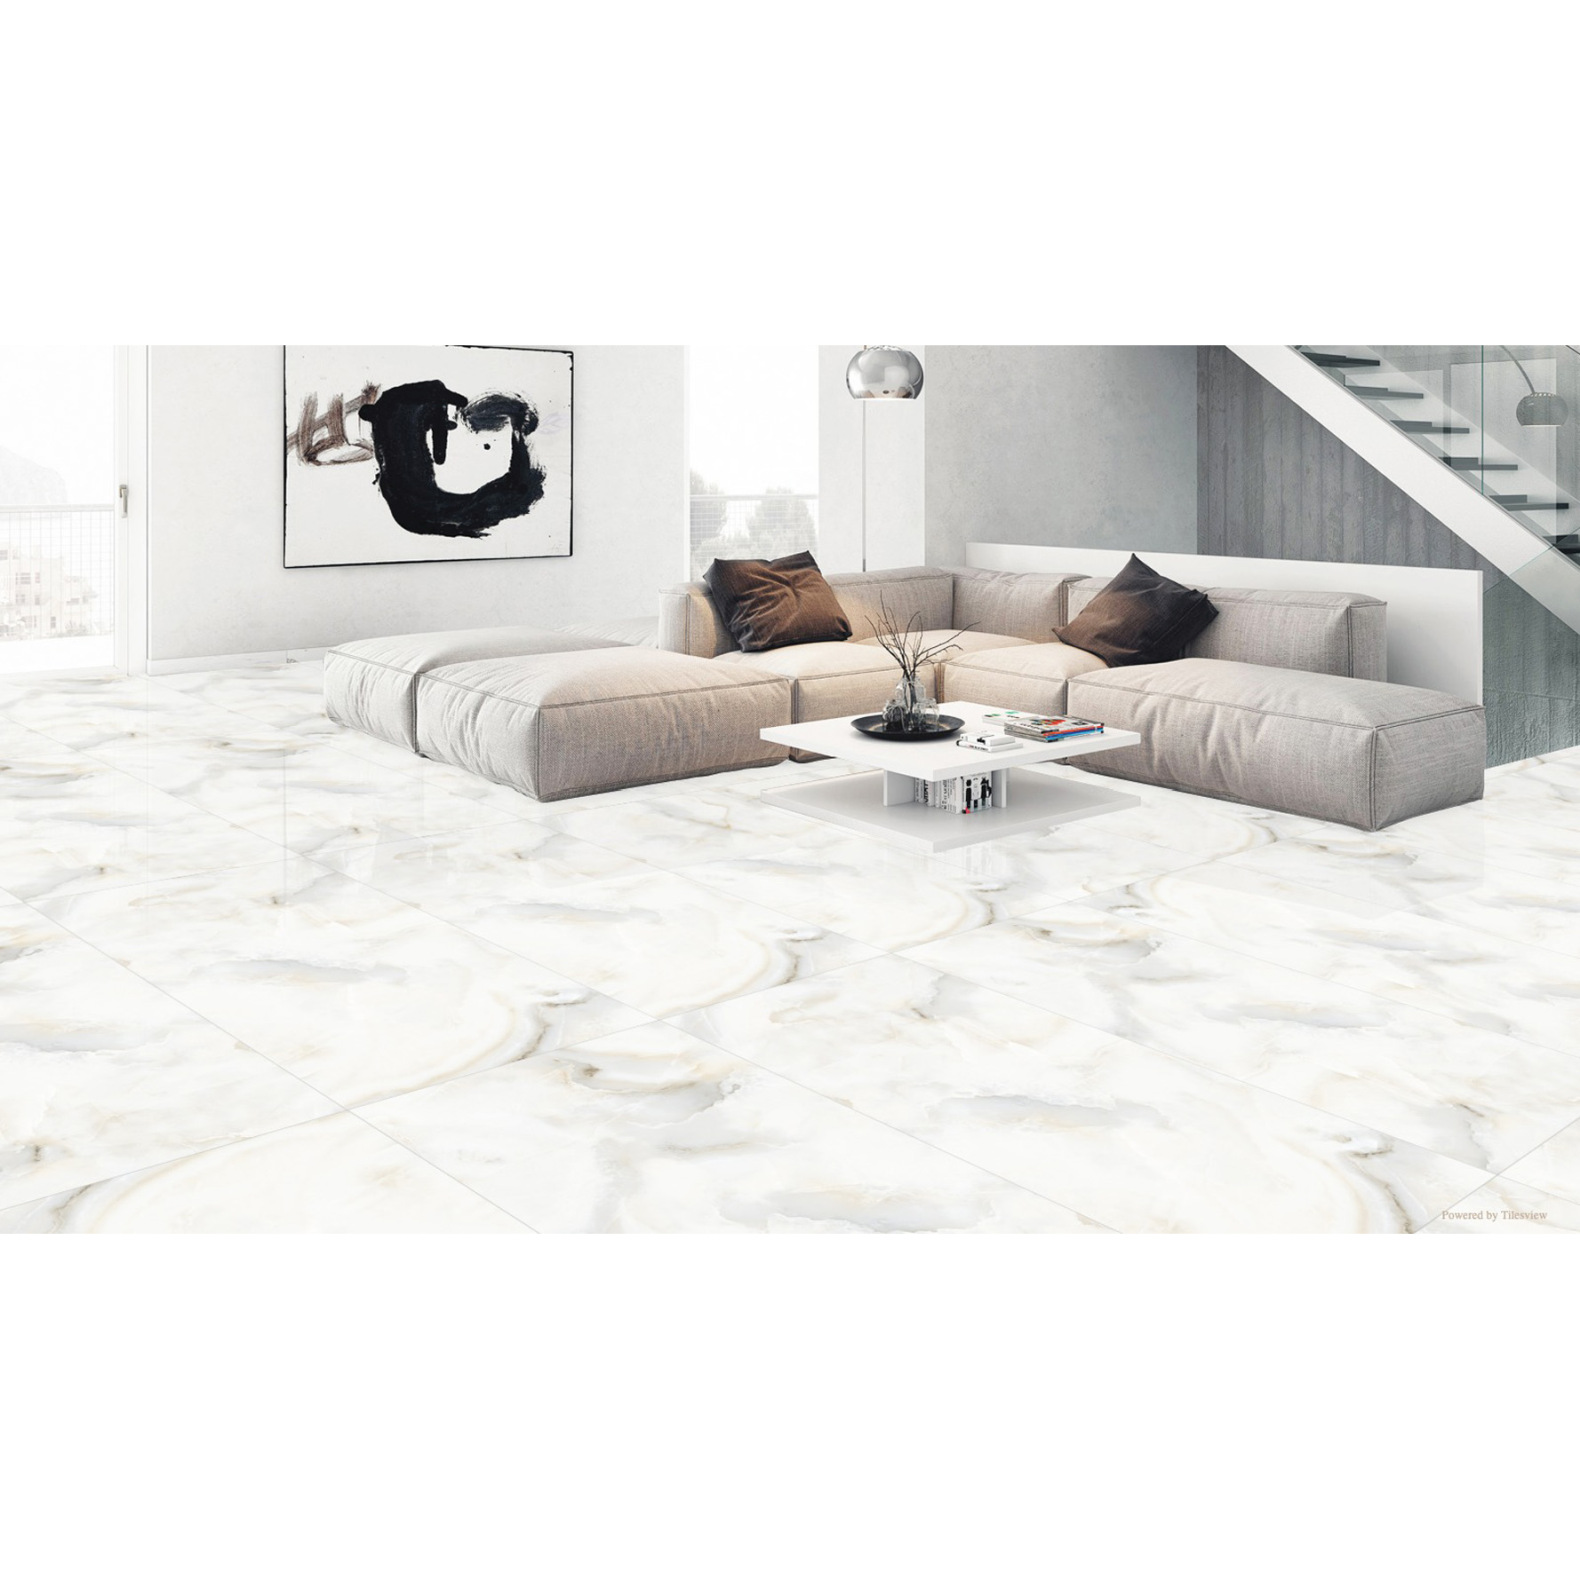 Керамогранит Itc Ceramica Cloudy Onyx White Sugar 60x120 см